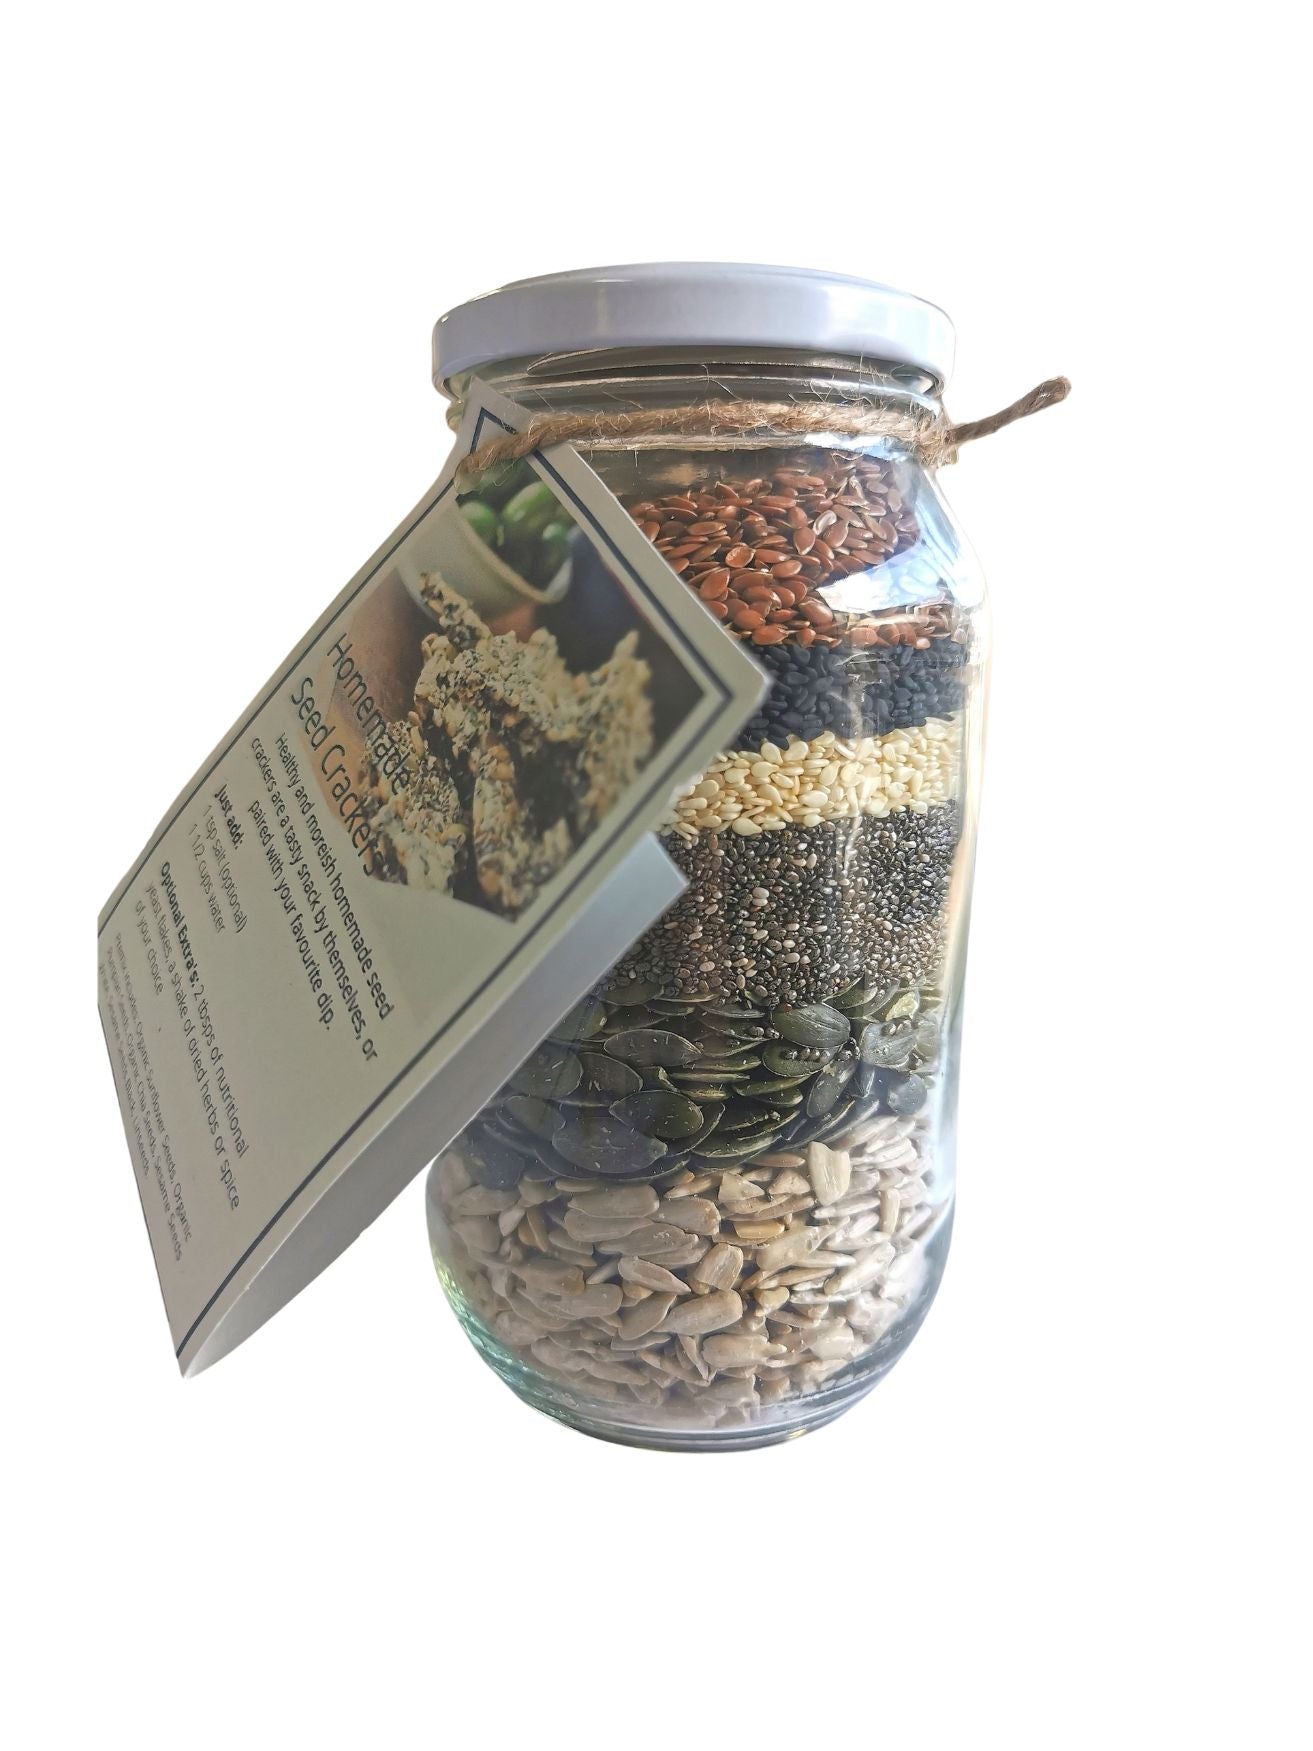 Seed Cracker Mix - Jar / Bag